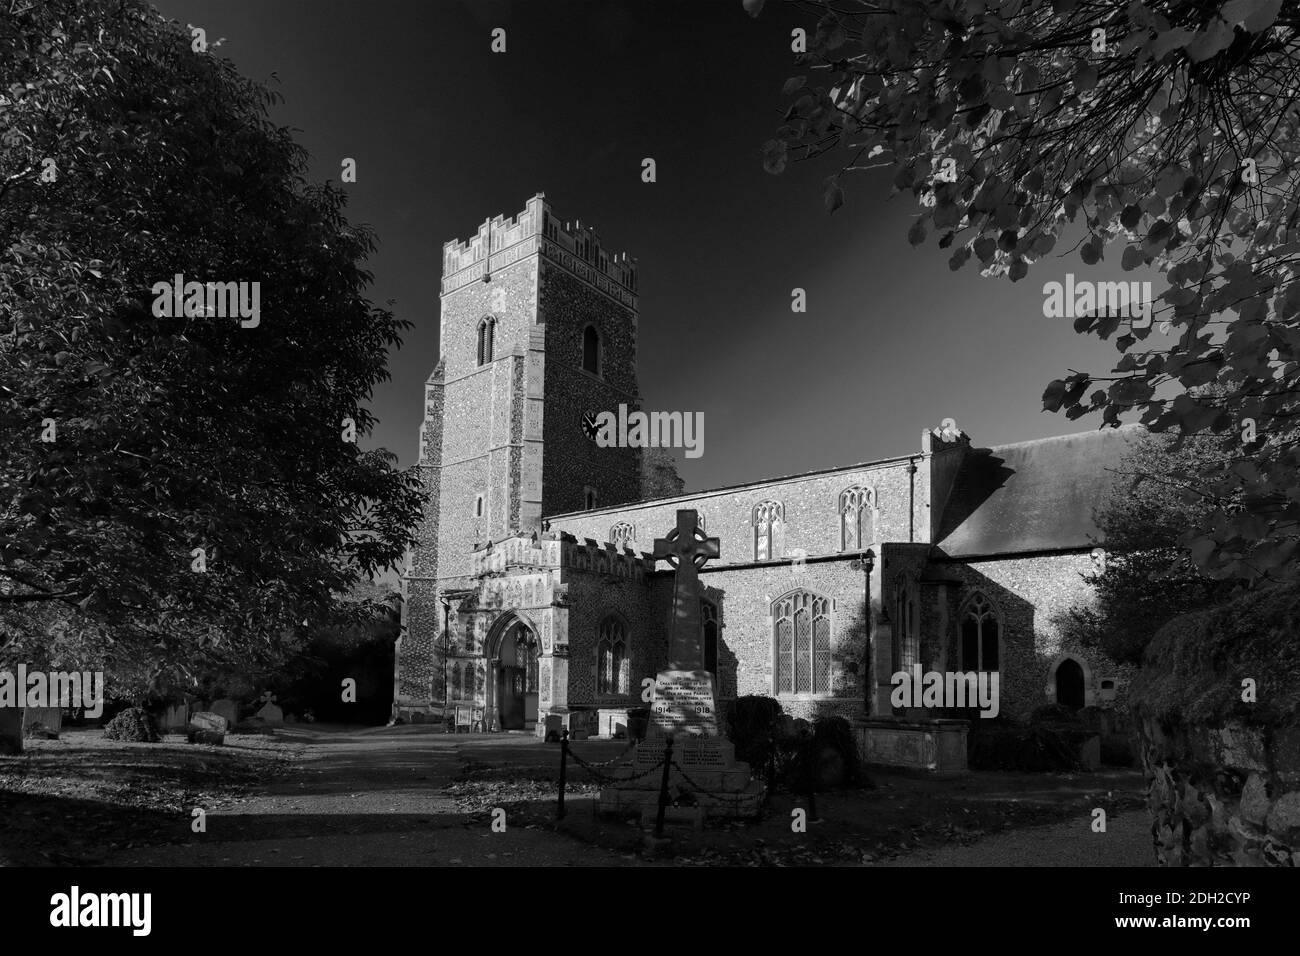 St Marys church, Ixworth village, Suffolk county, England, UK Stock Photo